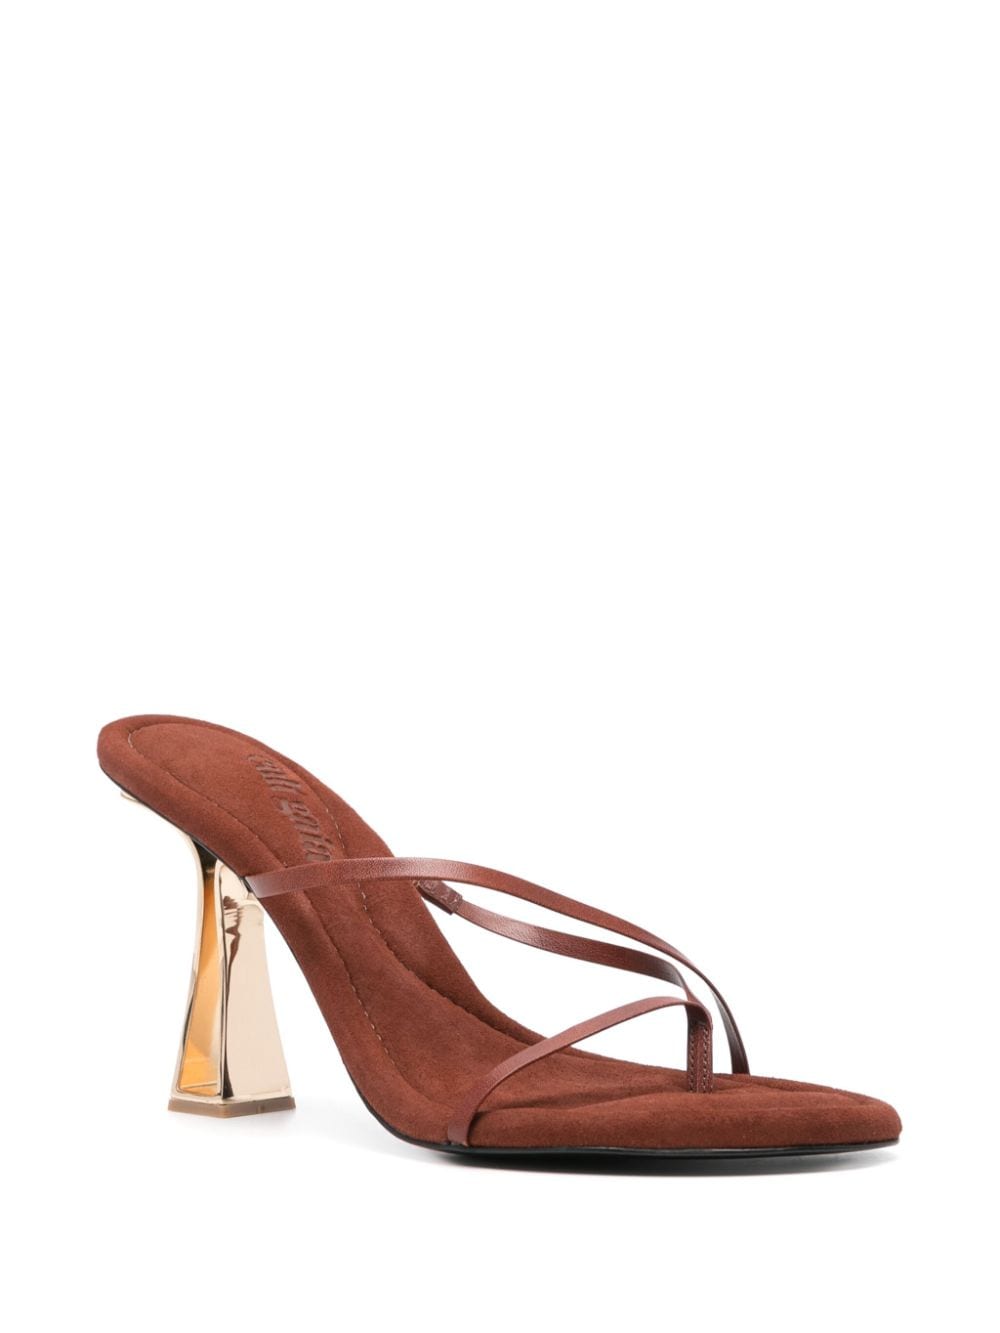 Cult Gaia Soriah 105mm leather sandals - Bruin